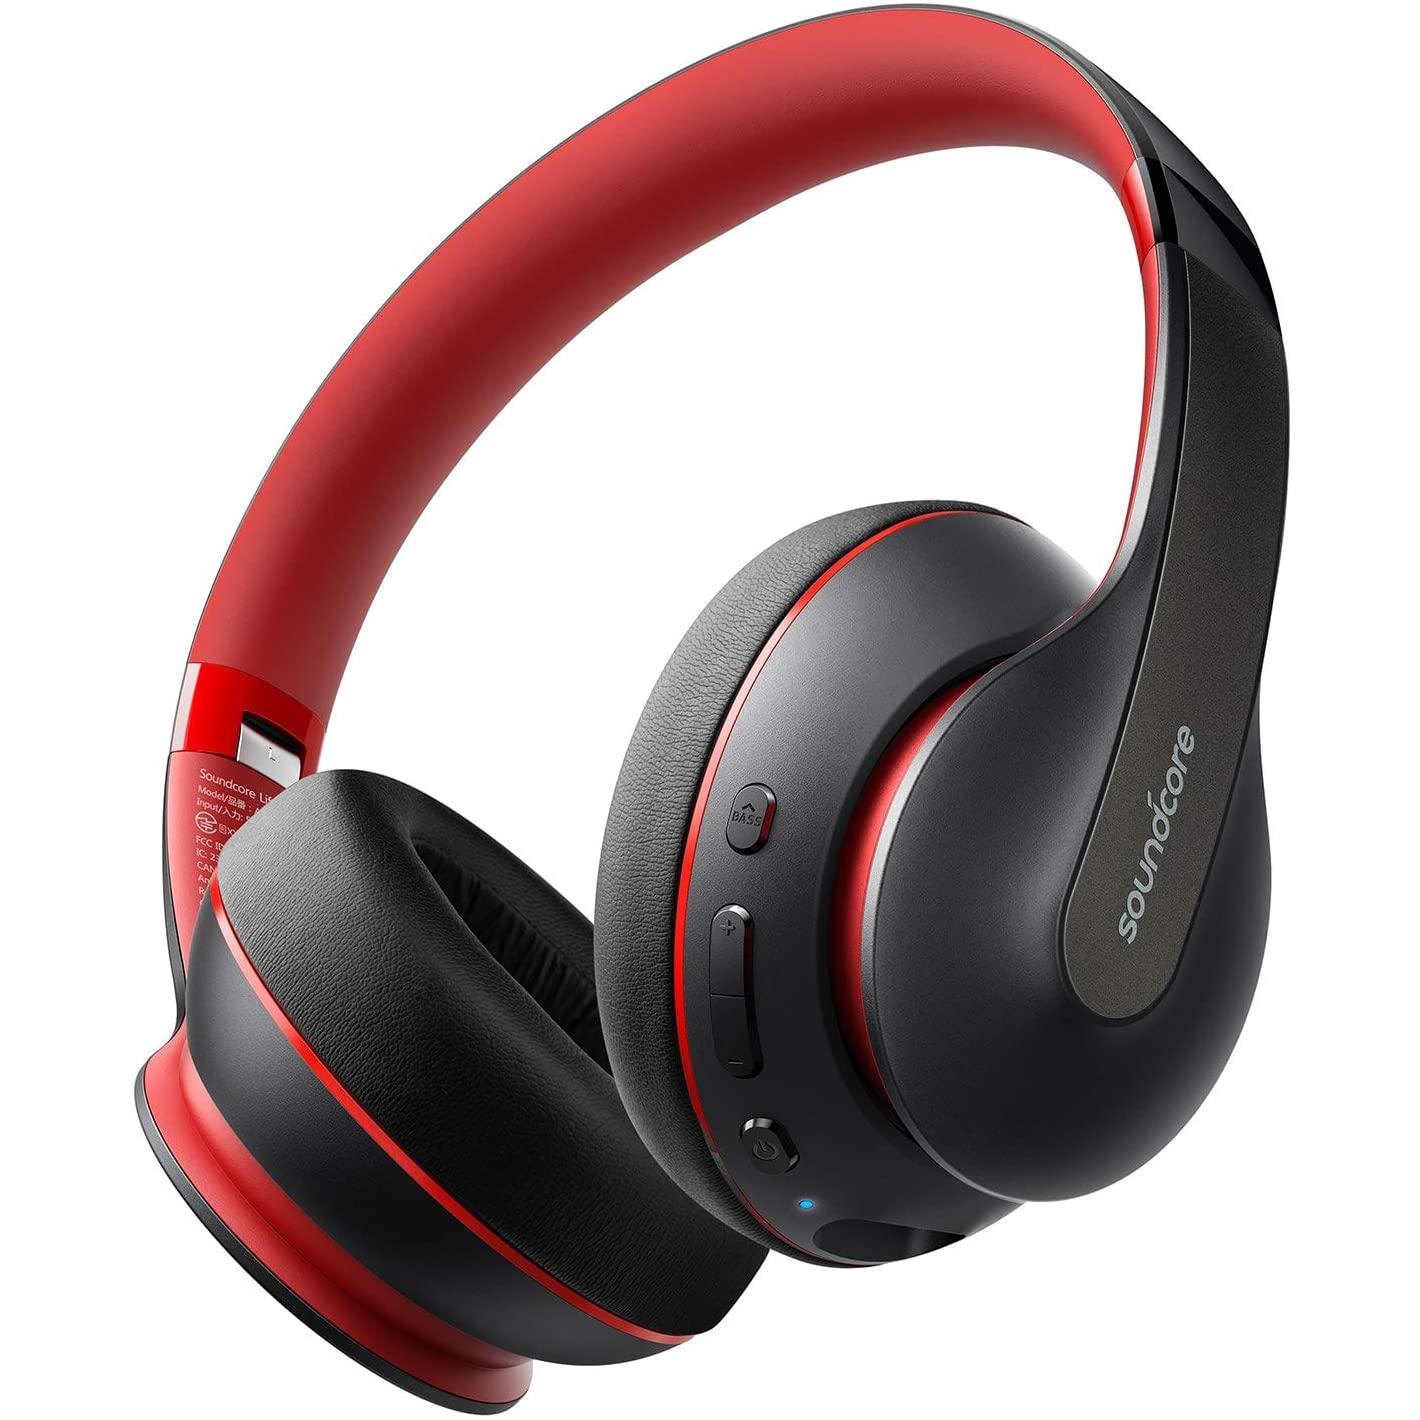 Anker Soundcore Life Q10 Wireless Bluetooth Headphones for $23.79